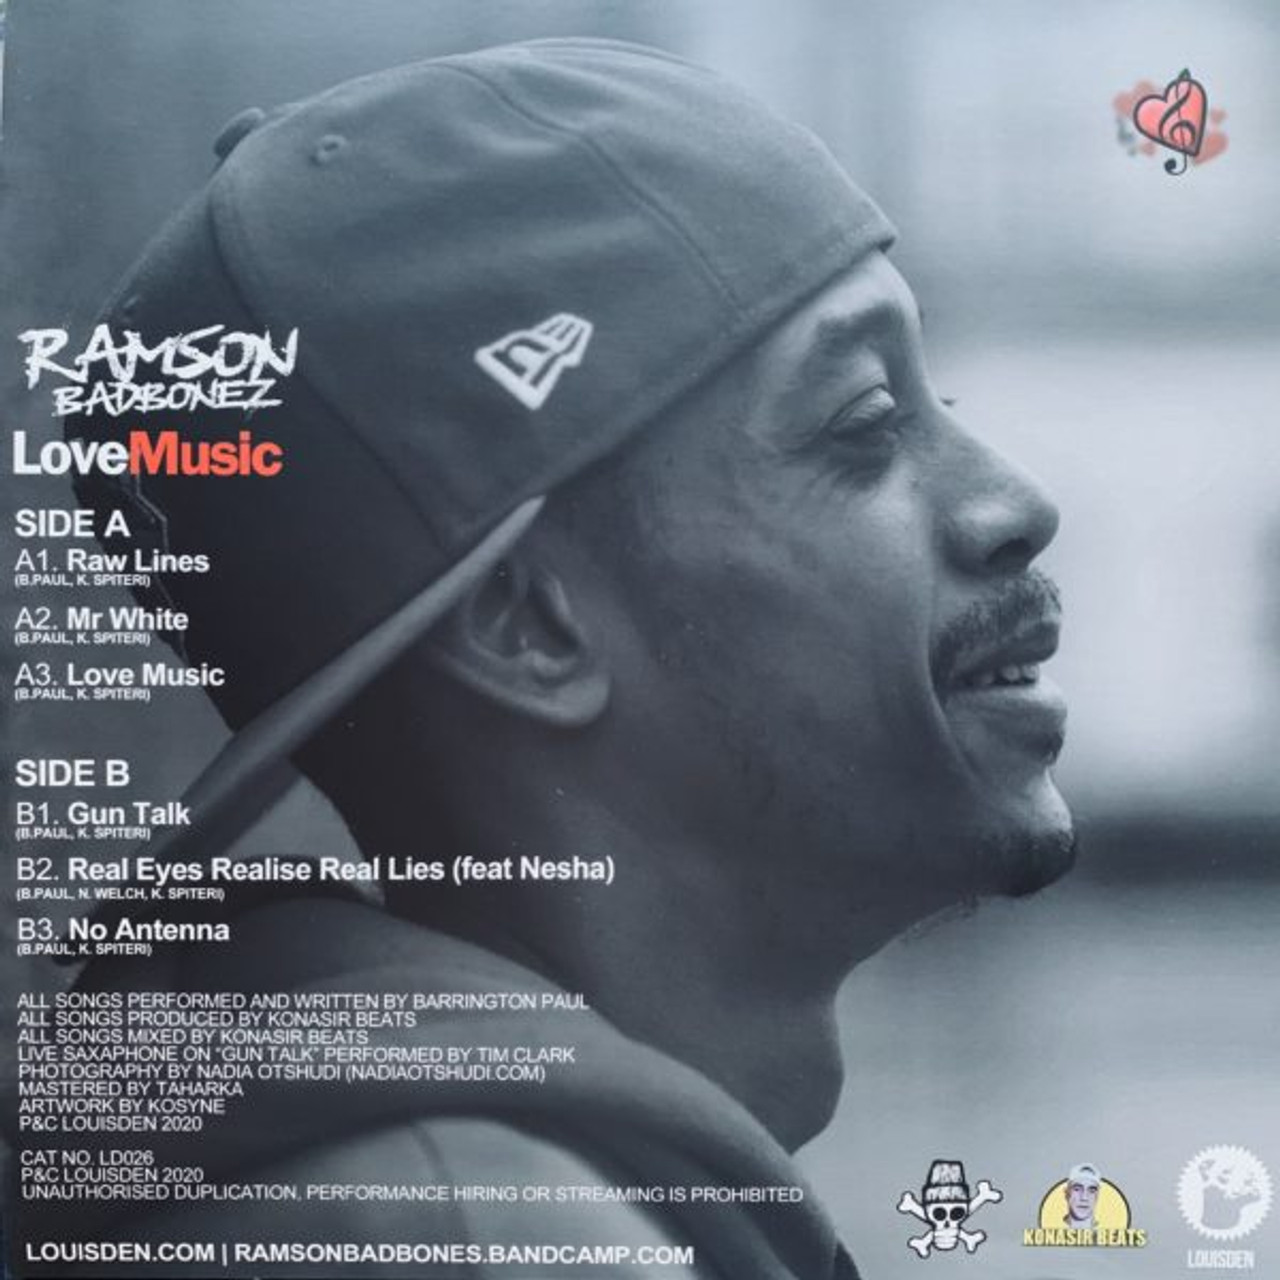 Ramson Badbonez - Love Music back cover